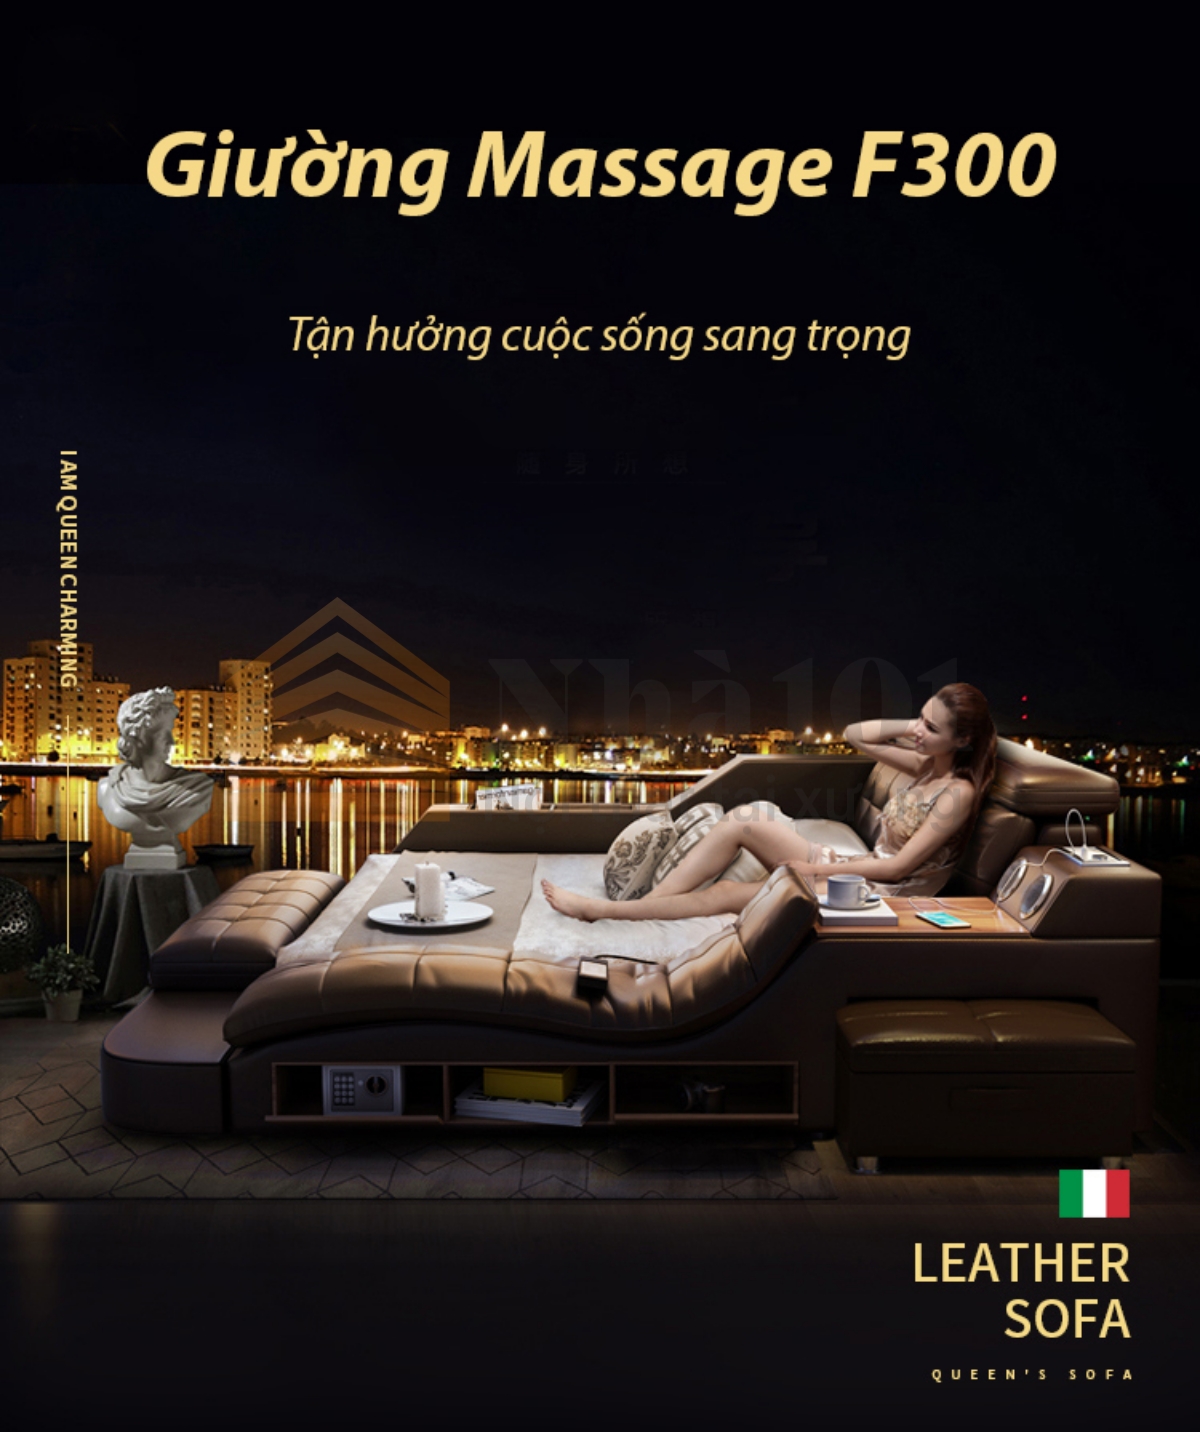 Giường Massage Cao Cấp F300, Giường Massage, Giường Nhà Sang Trọng 1